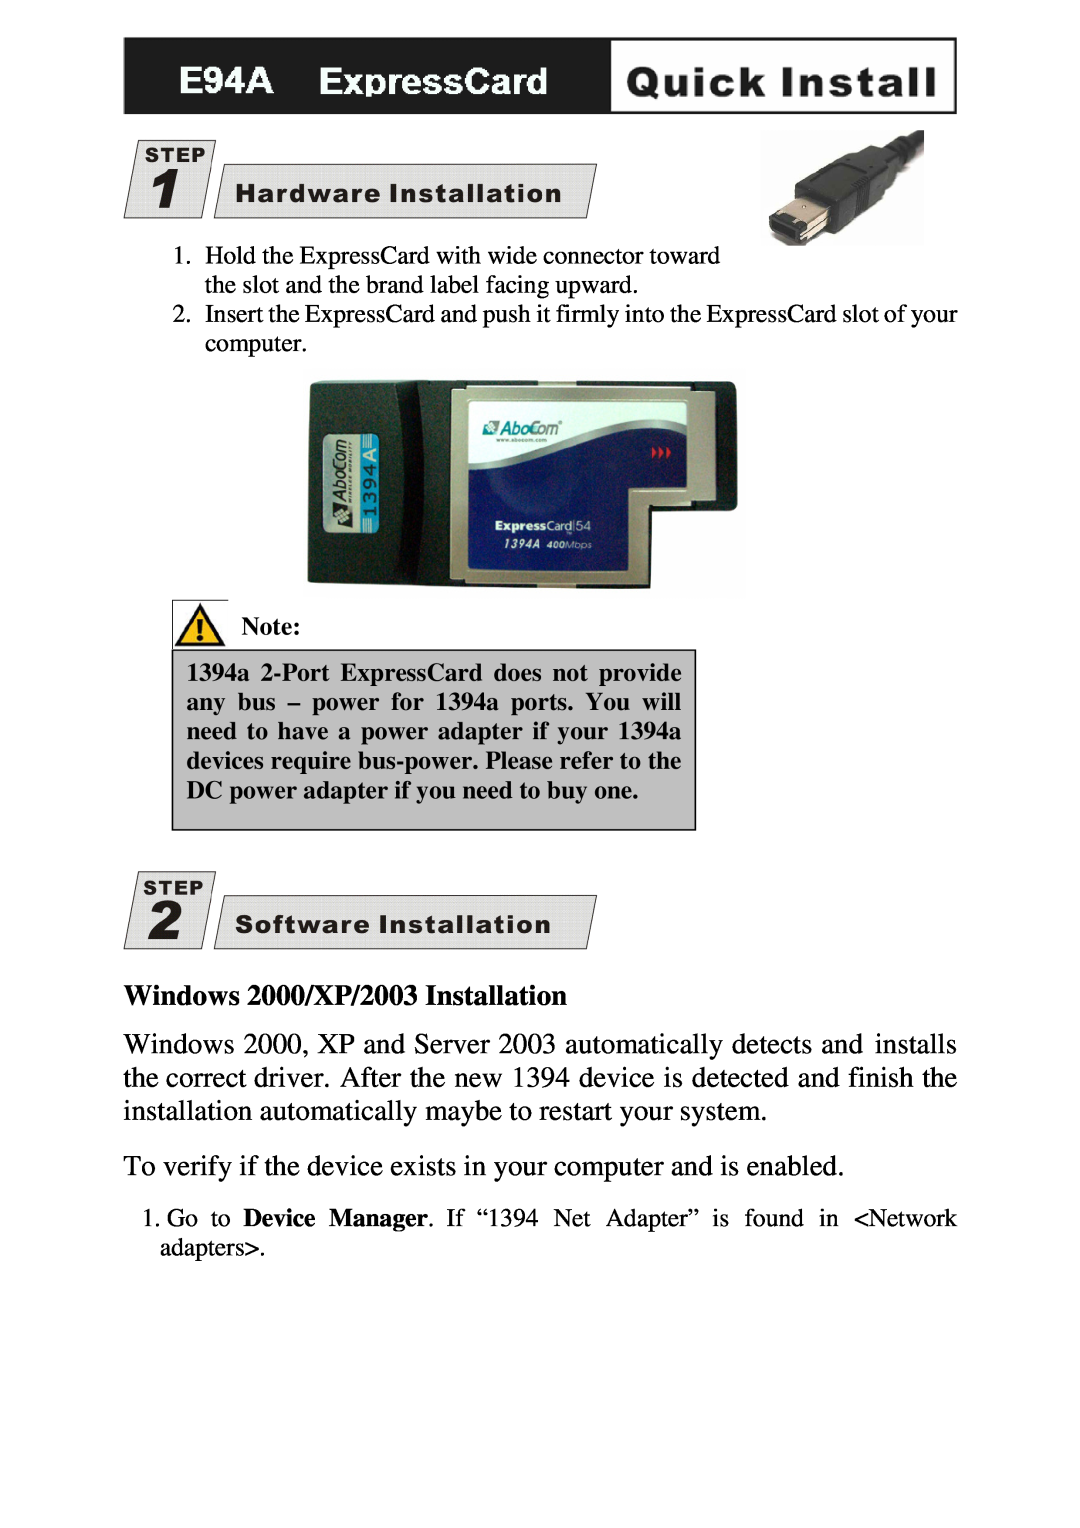 Abocom E94A manual Windows 2000/XP/2003 Installation 